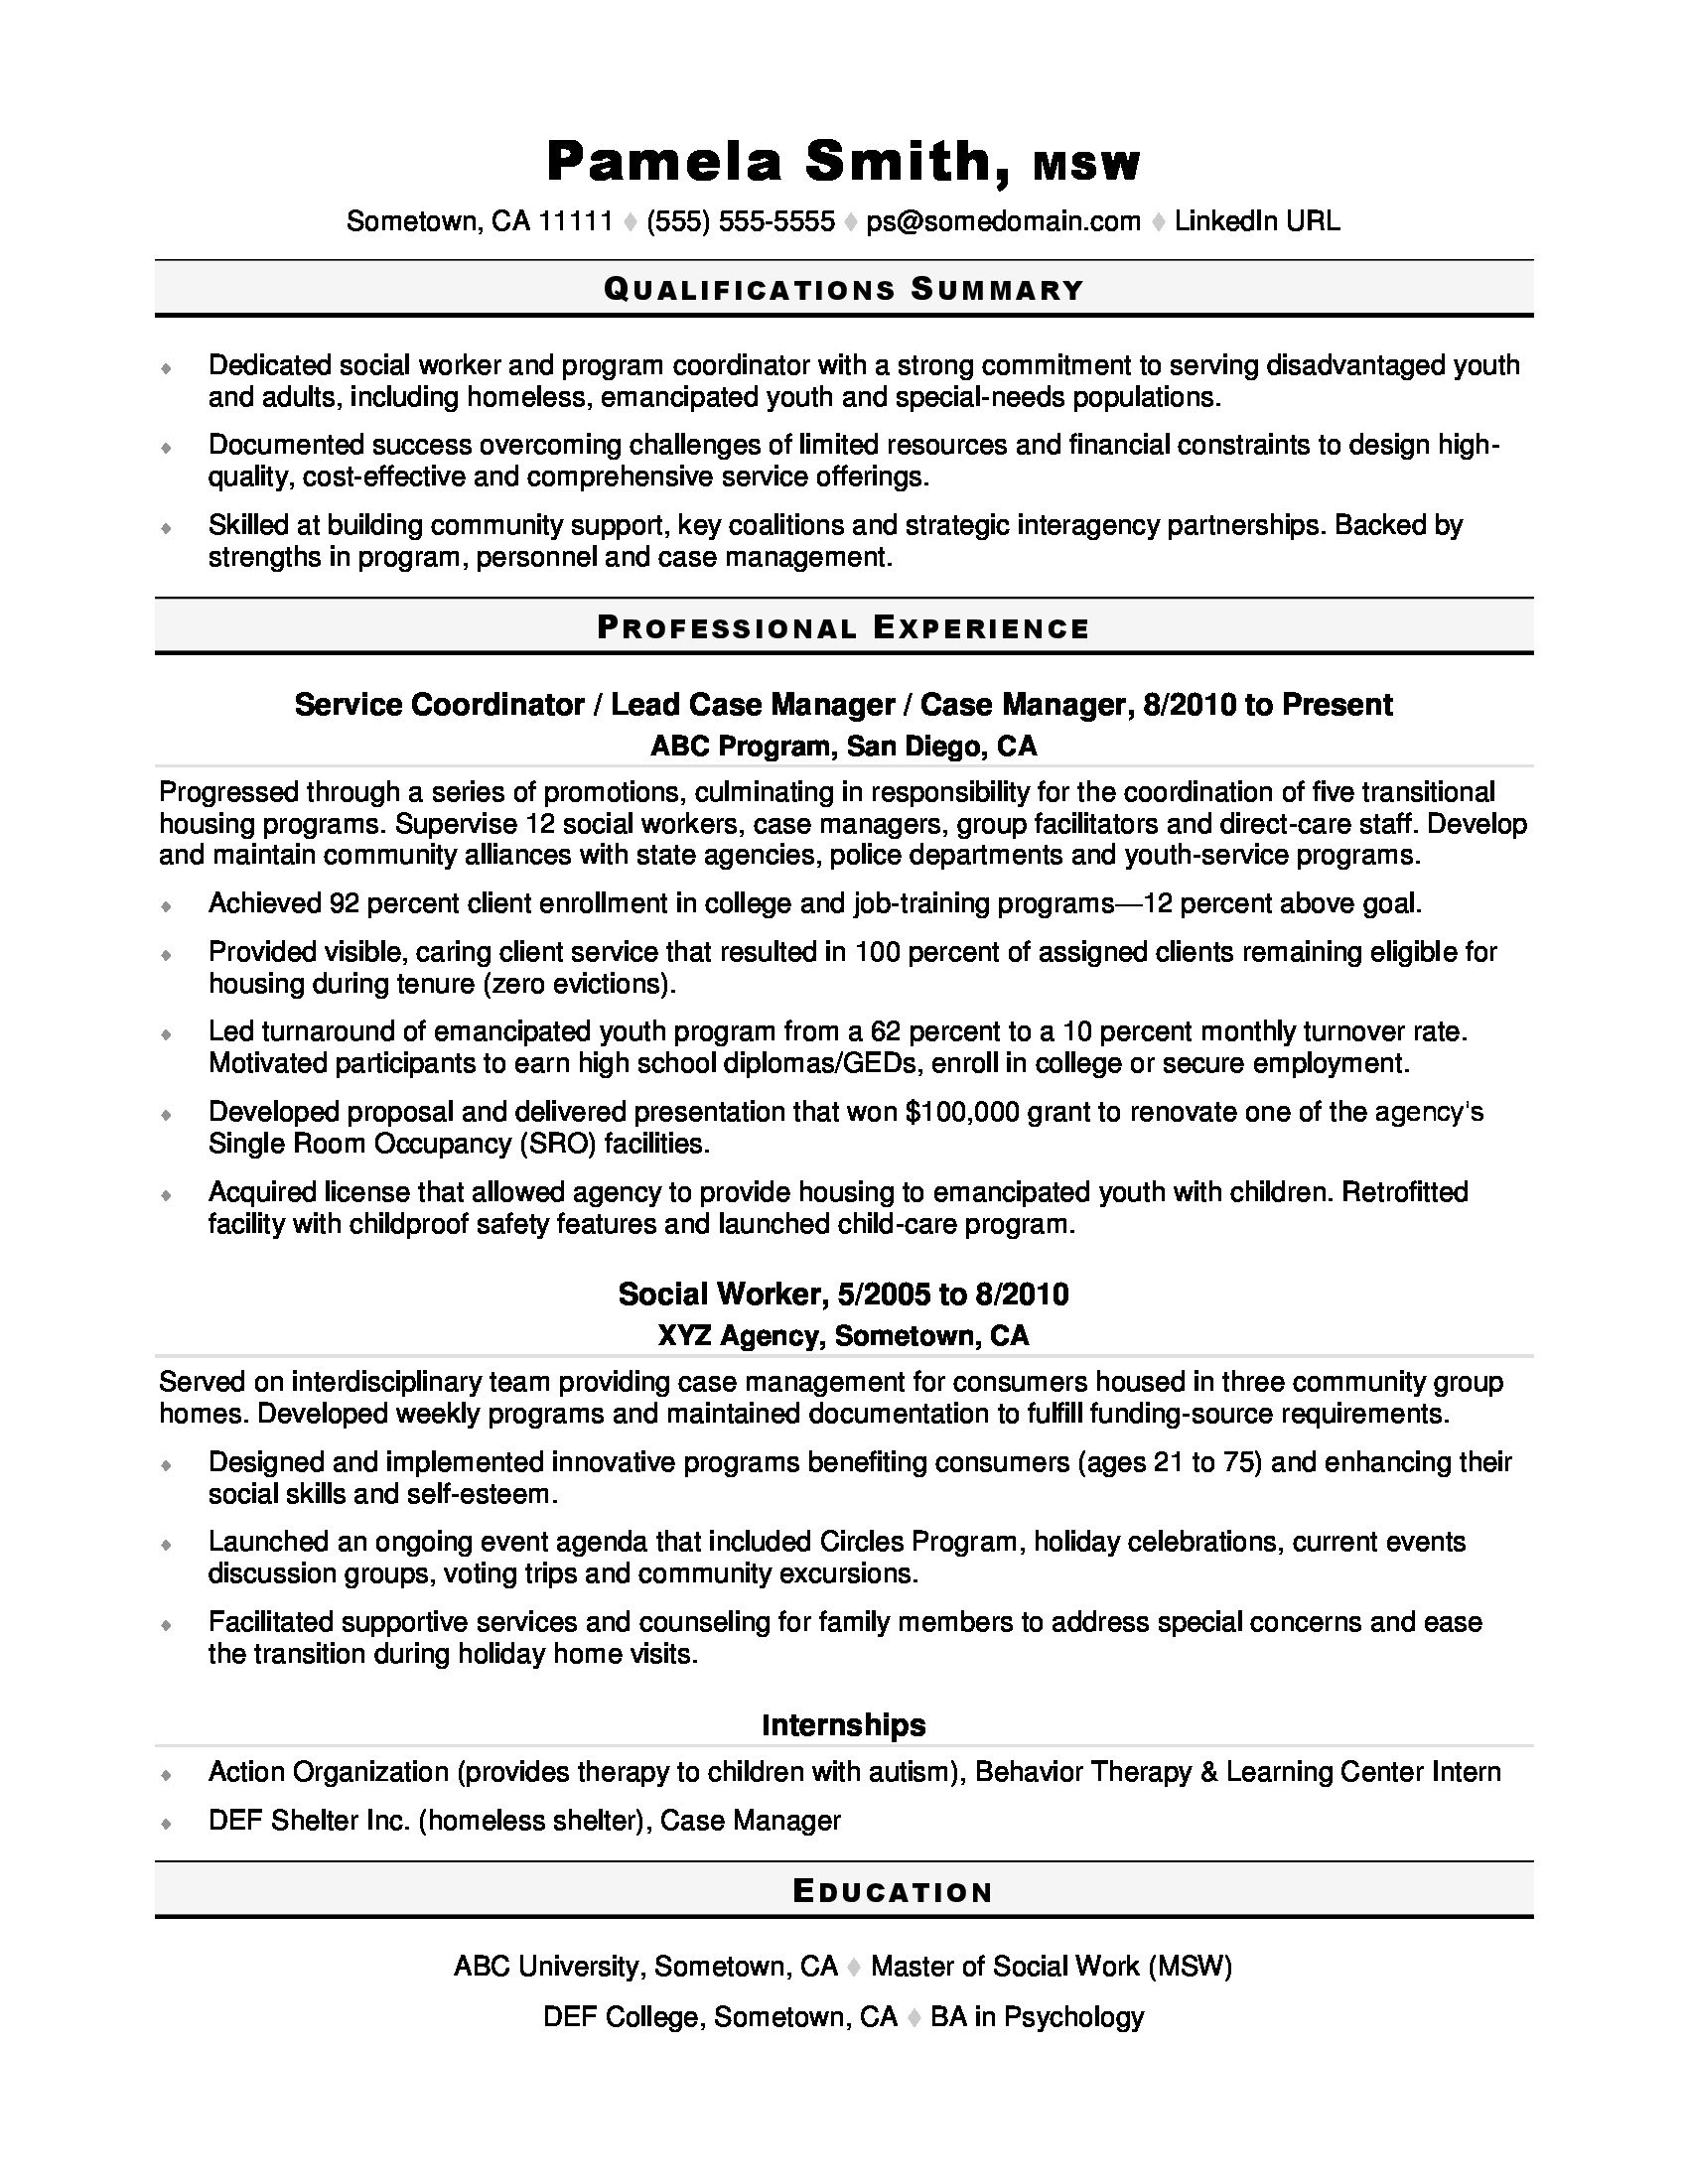 Sample Resume for social Worker assistant social Worker Resume Sample Monster.com